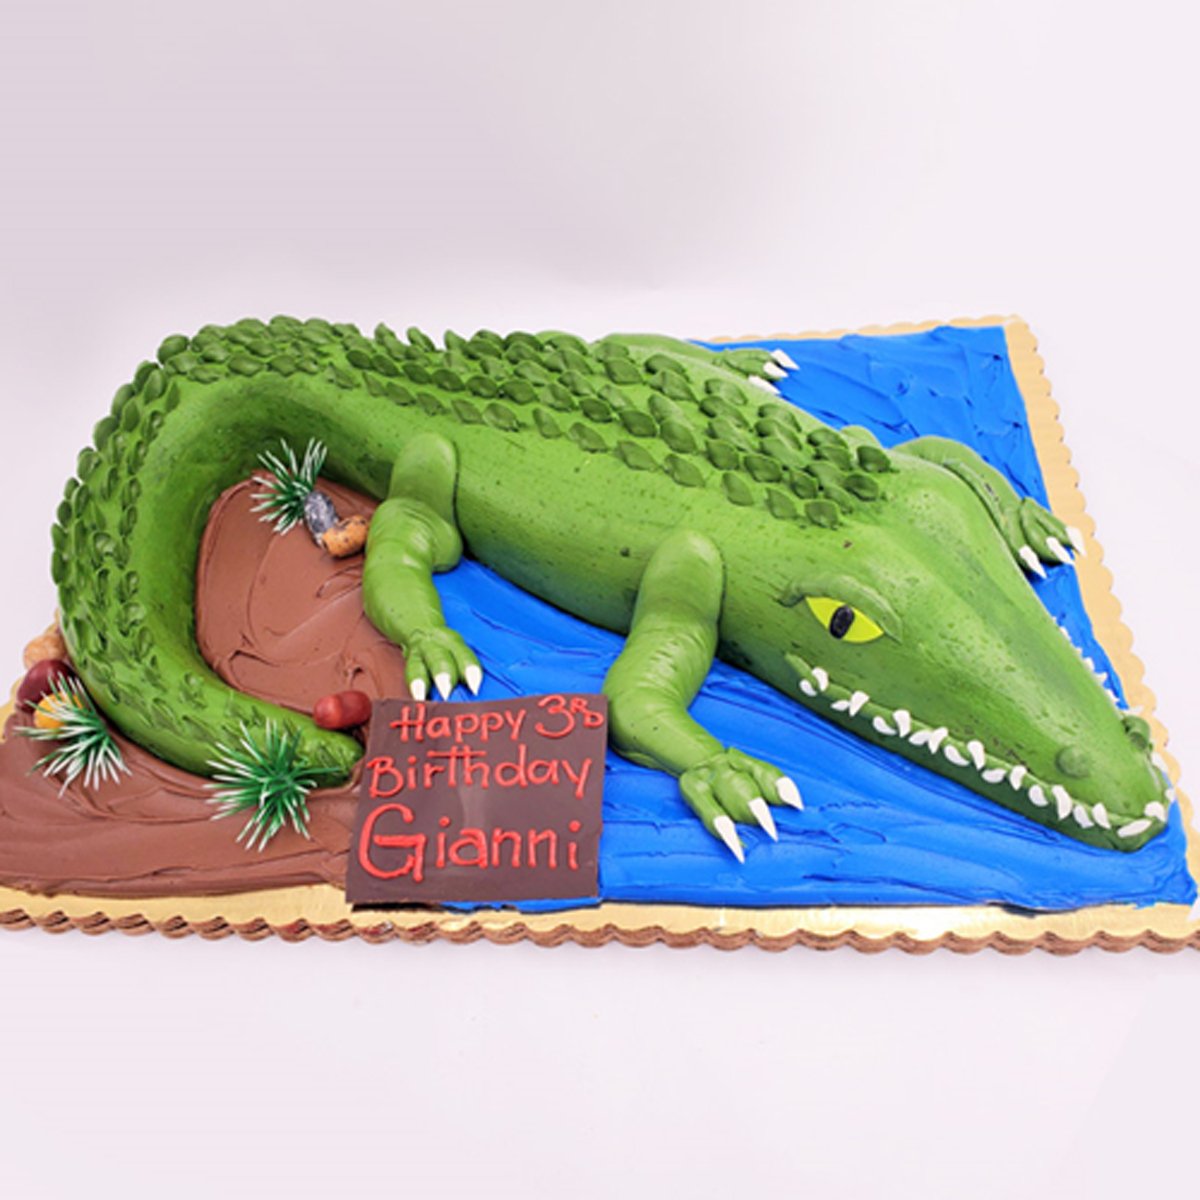 What A Dish!: Crocodile Cake!